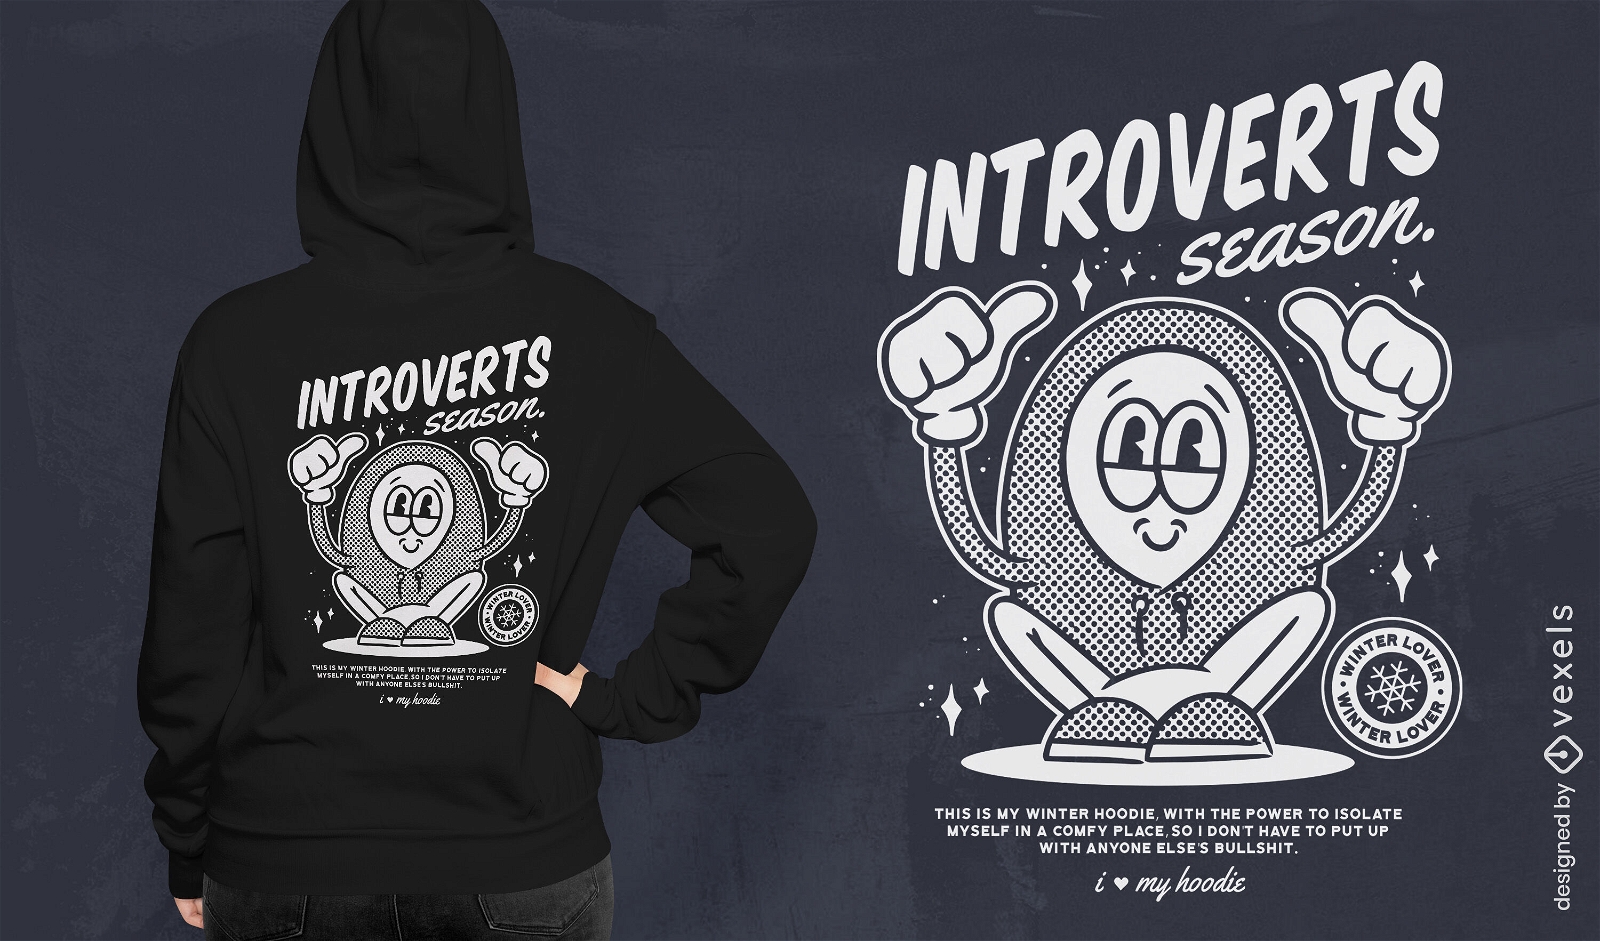 Introvert retro cartoon t-shirt design